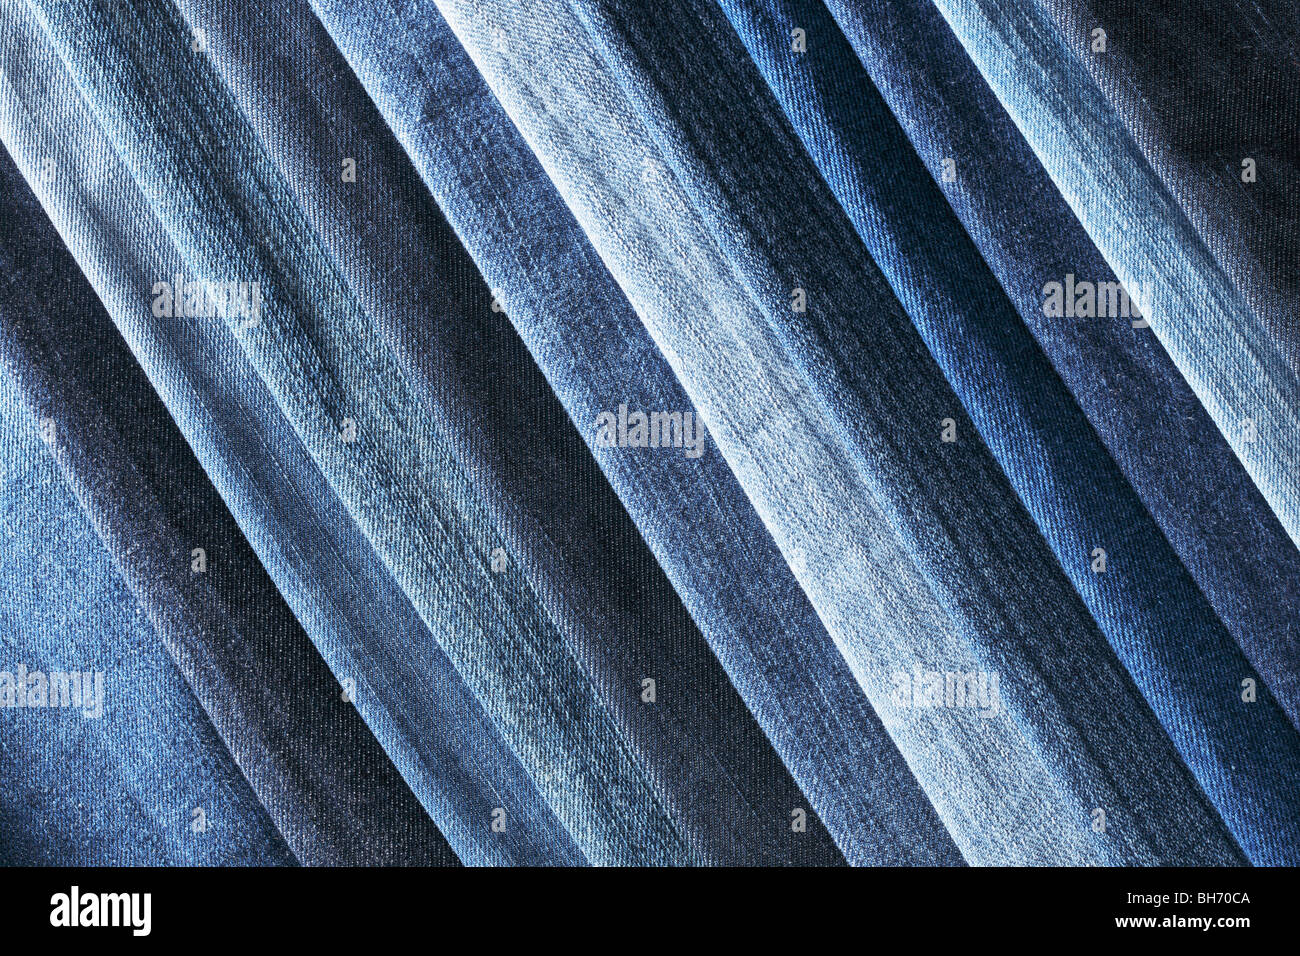 Different shades of blue jeans denim fabrics Stock Photo - Alamy